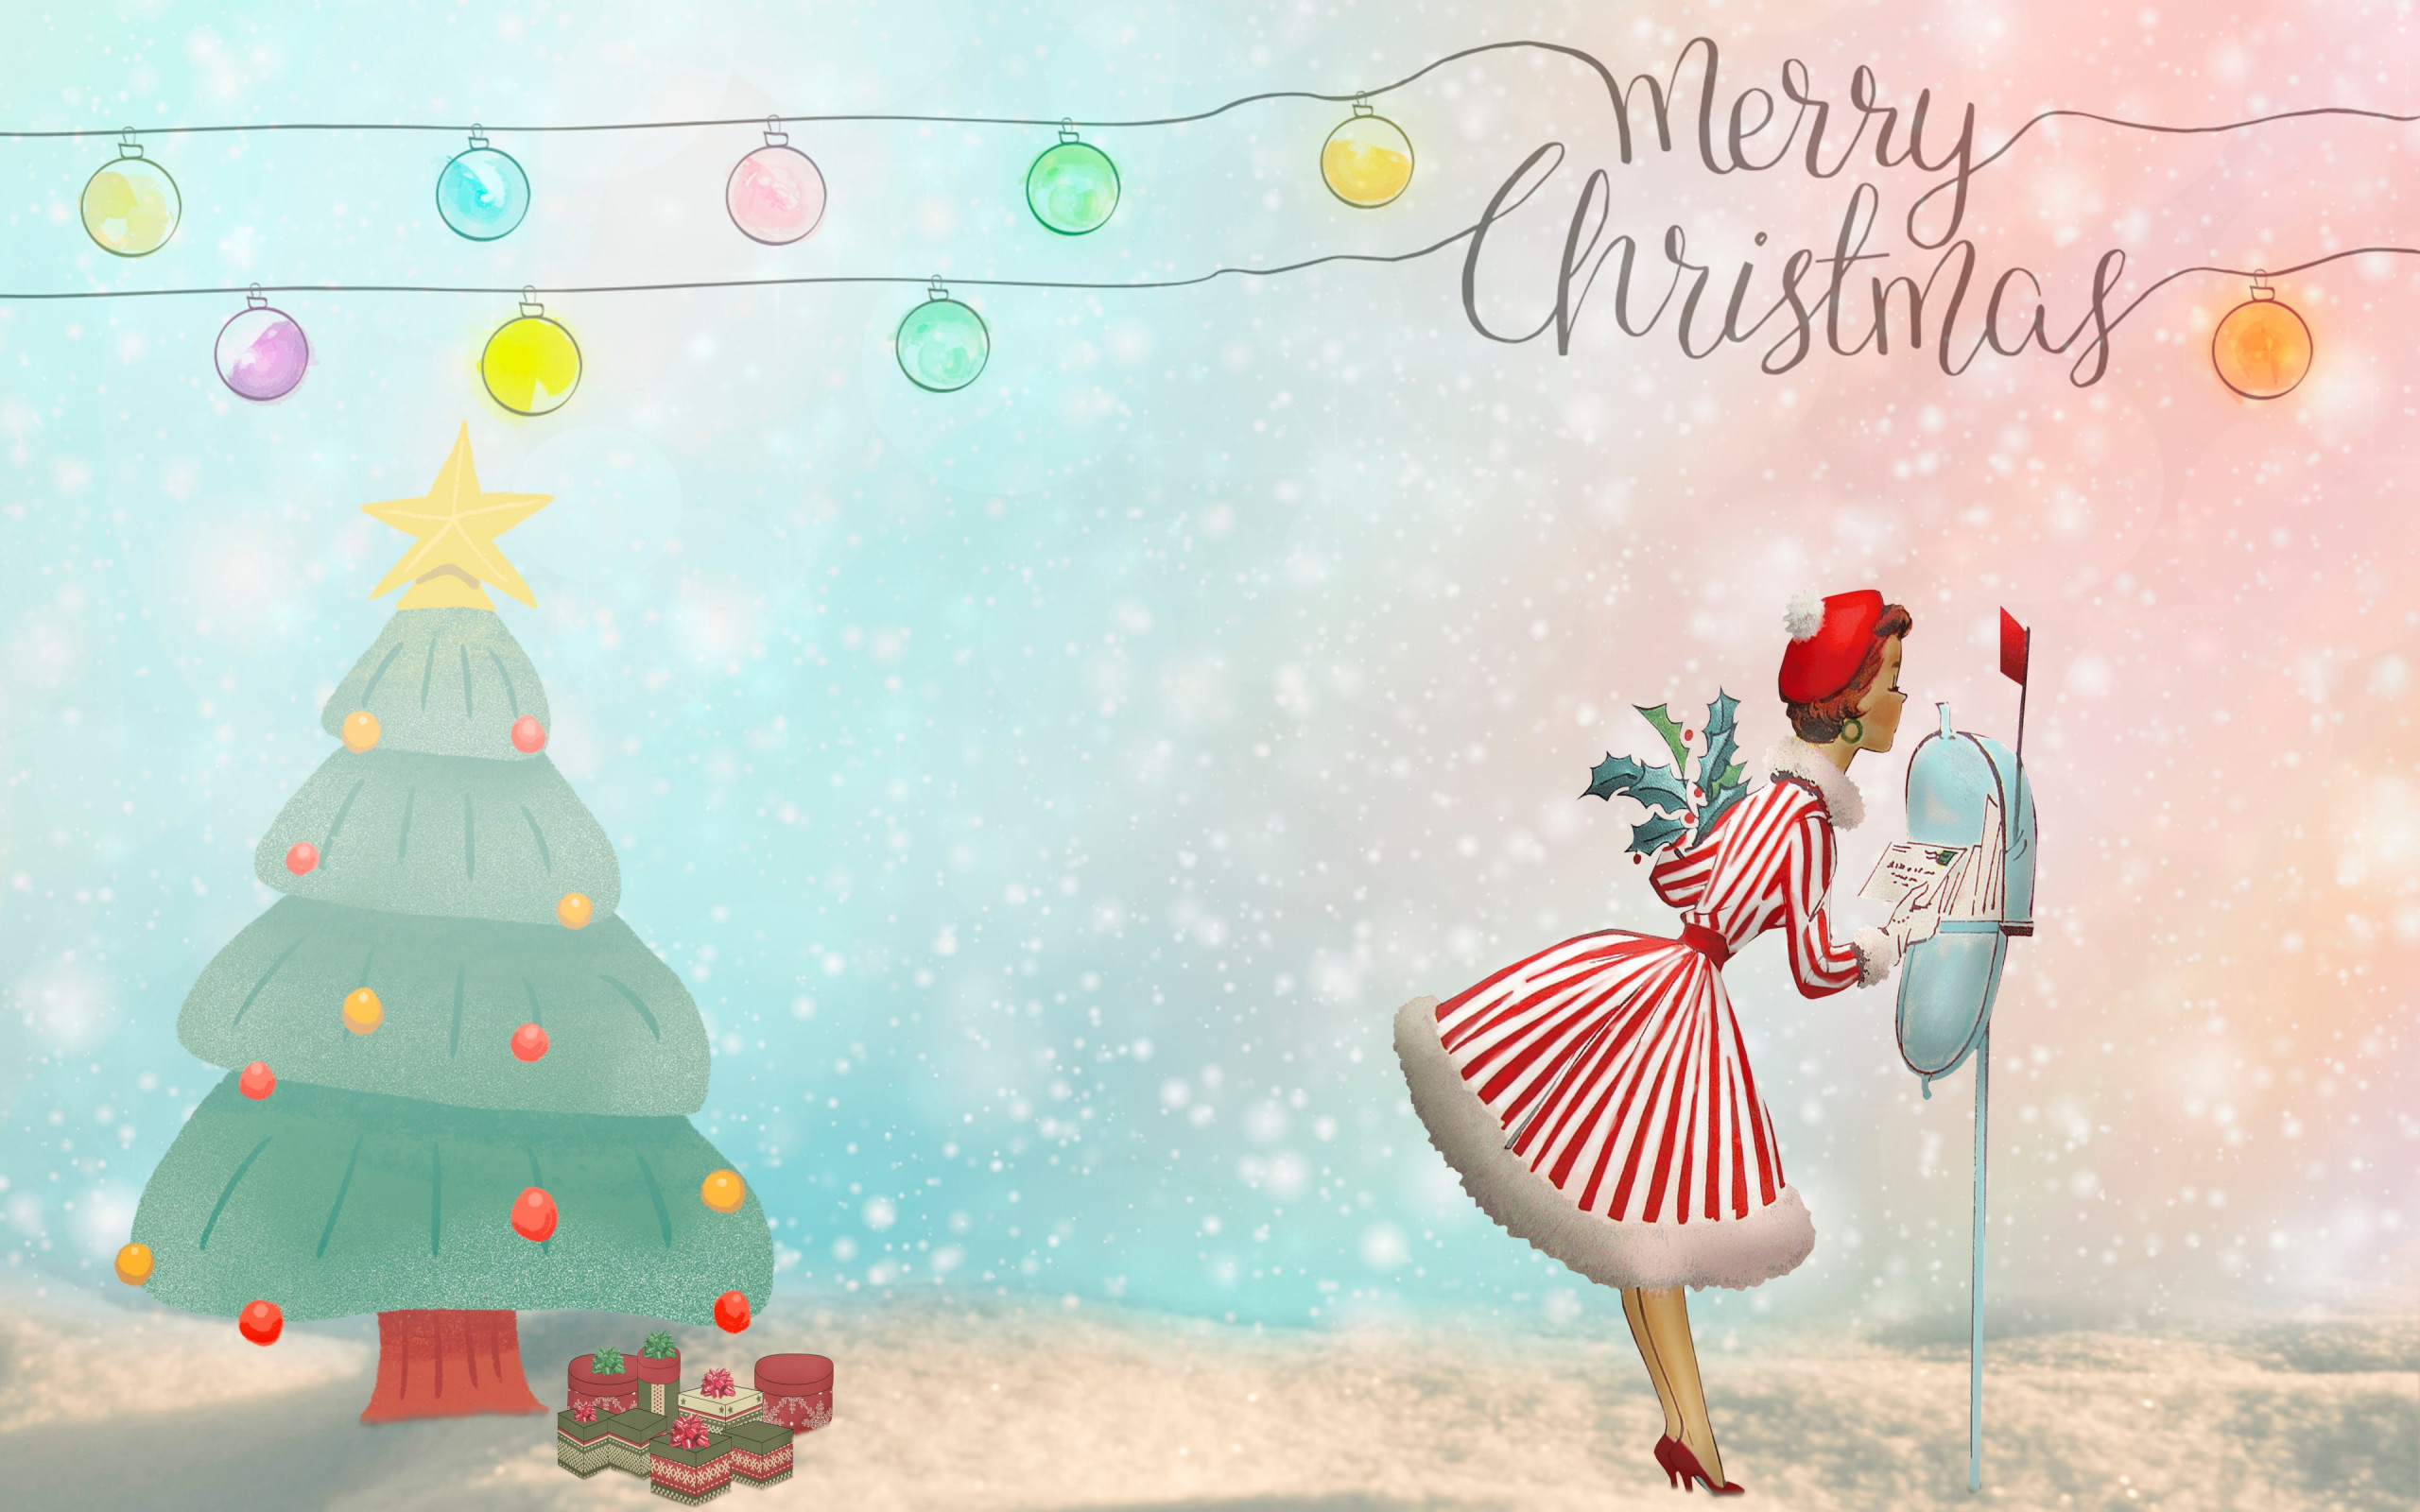 Download wallpaper: Merry Christmas 2020 Illustration 2560x1600